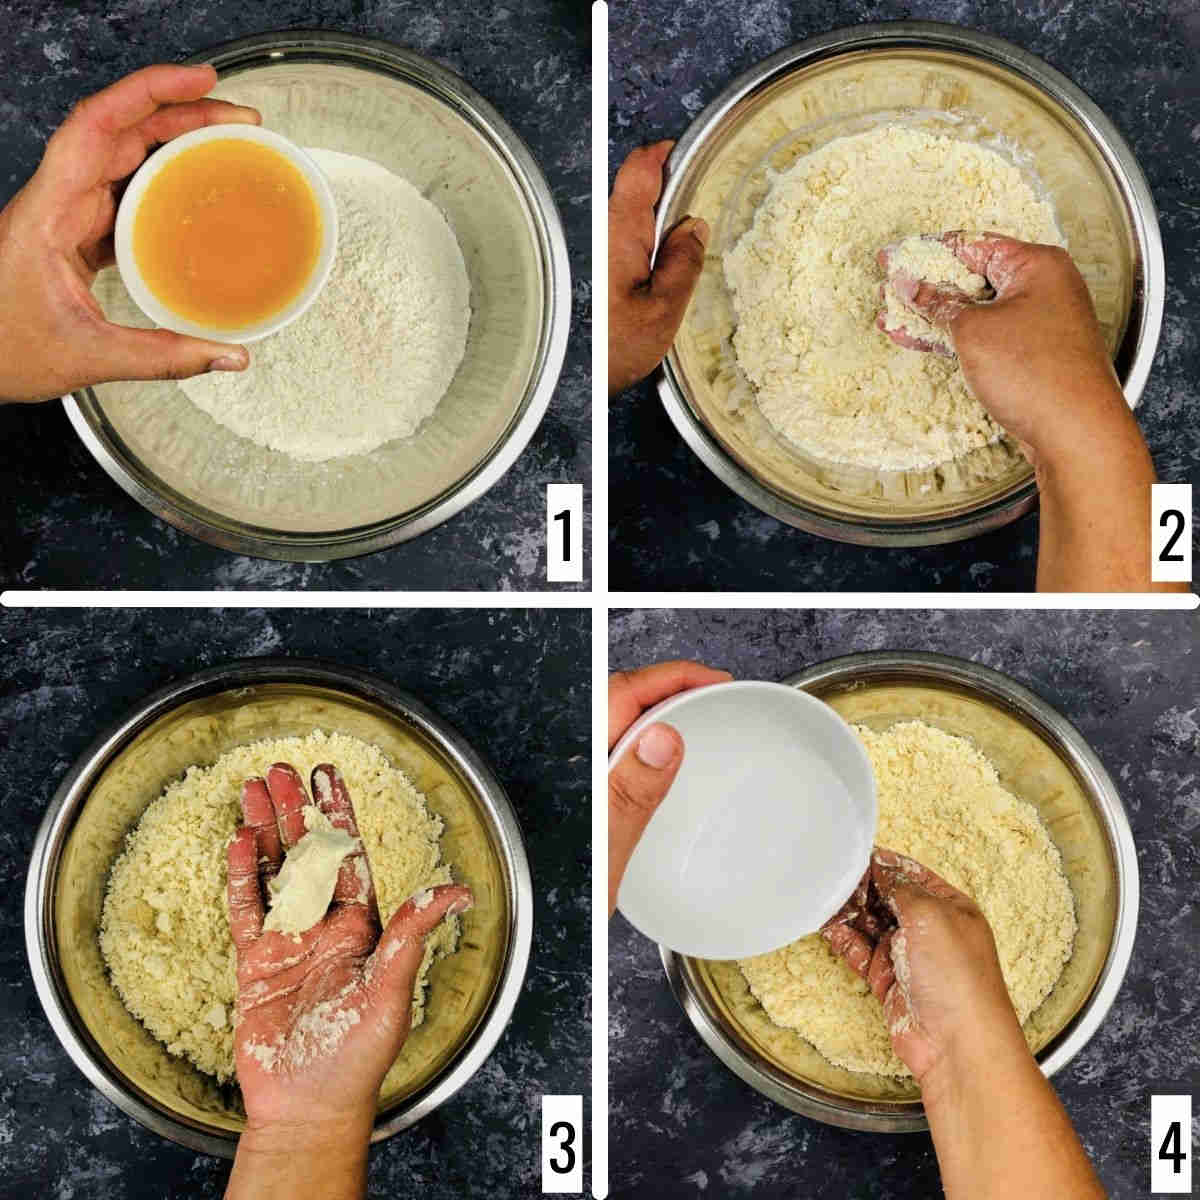 knead the dough.